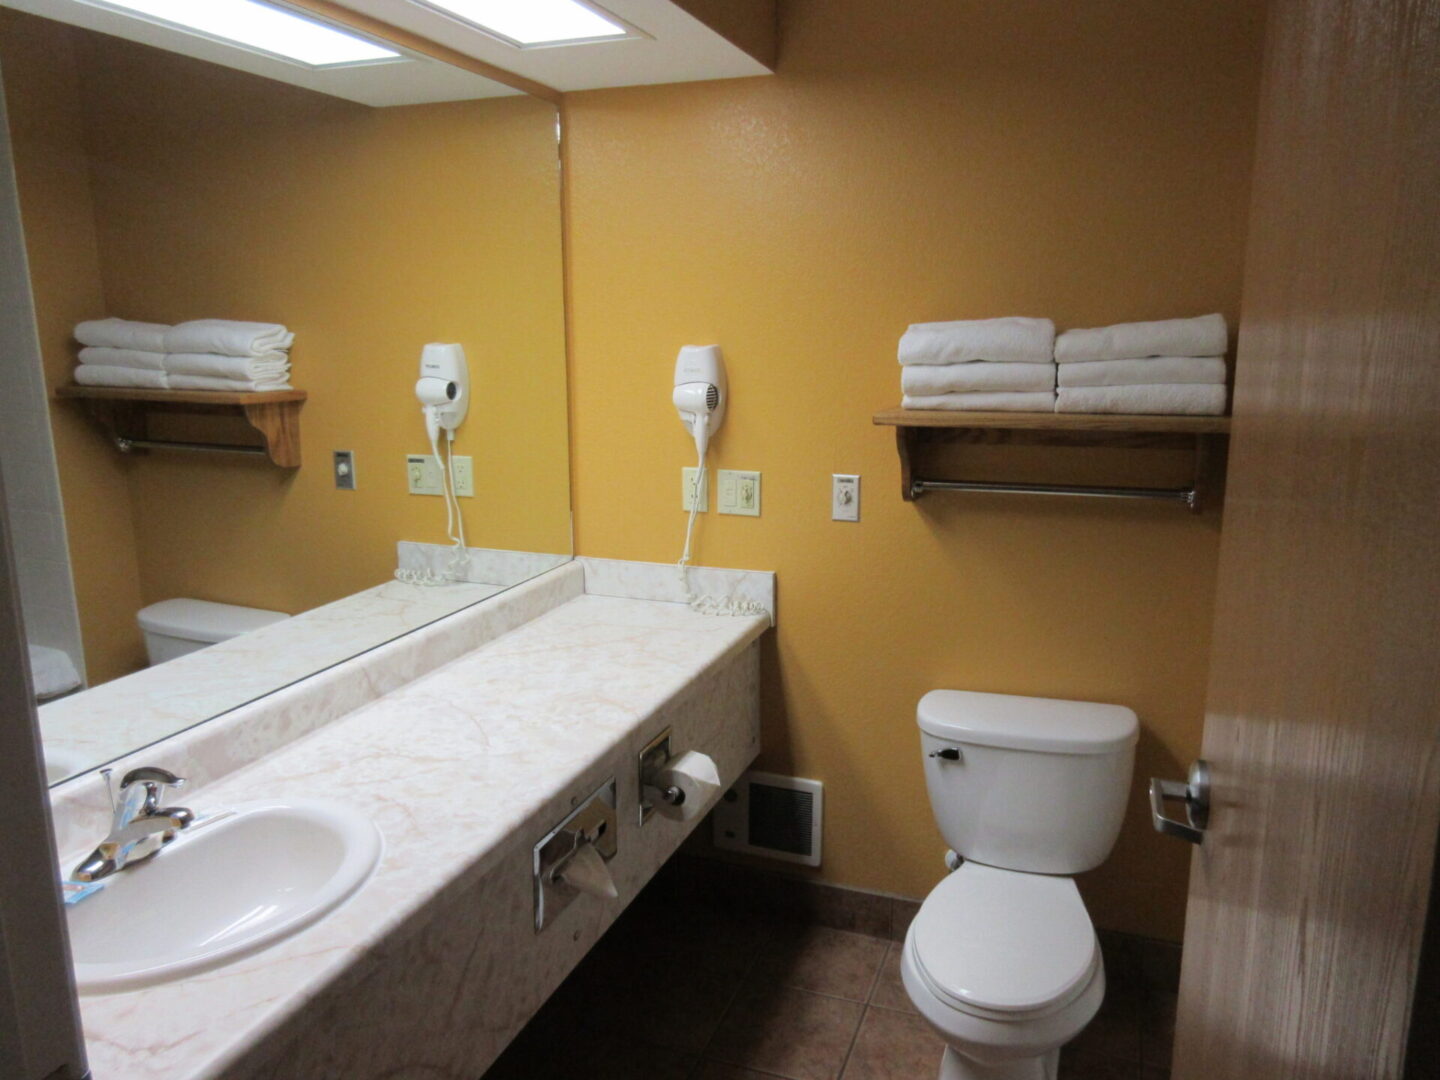 Luxury hotel washroom with water closet and wash basin